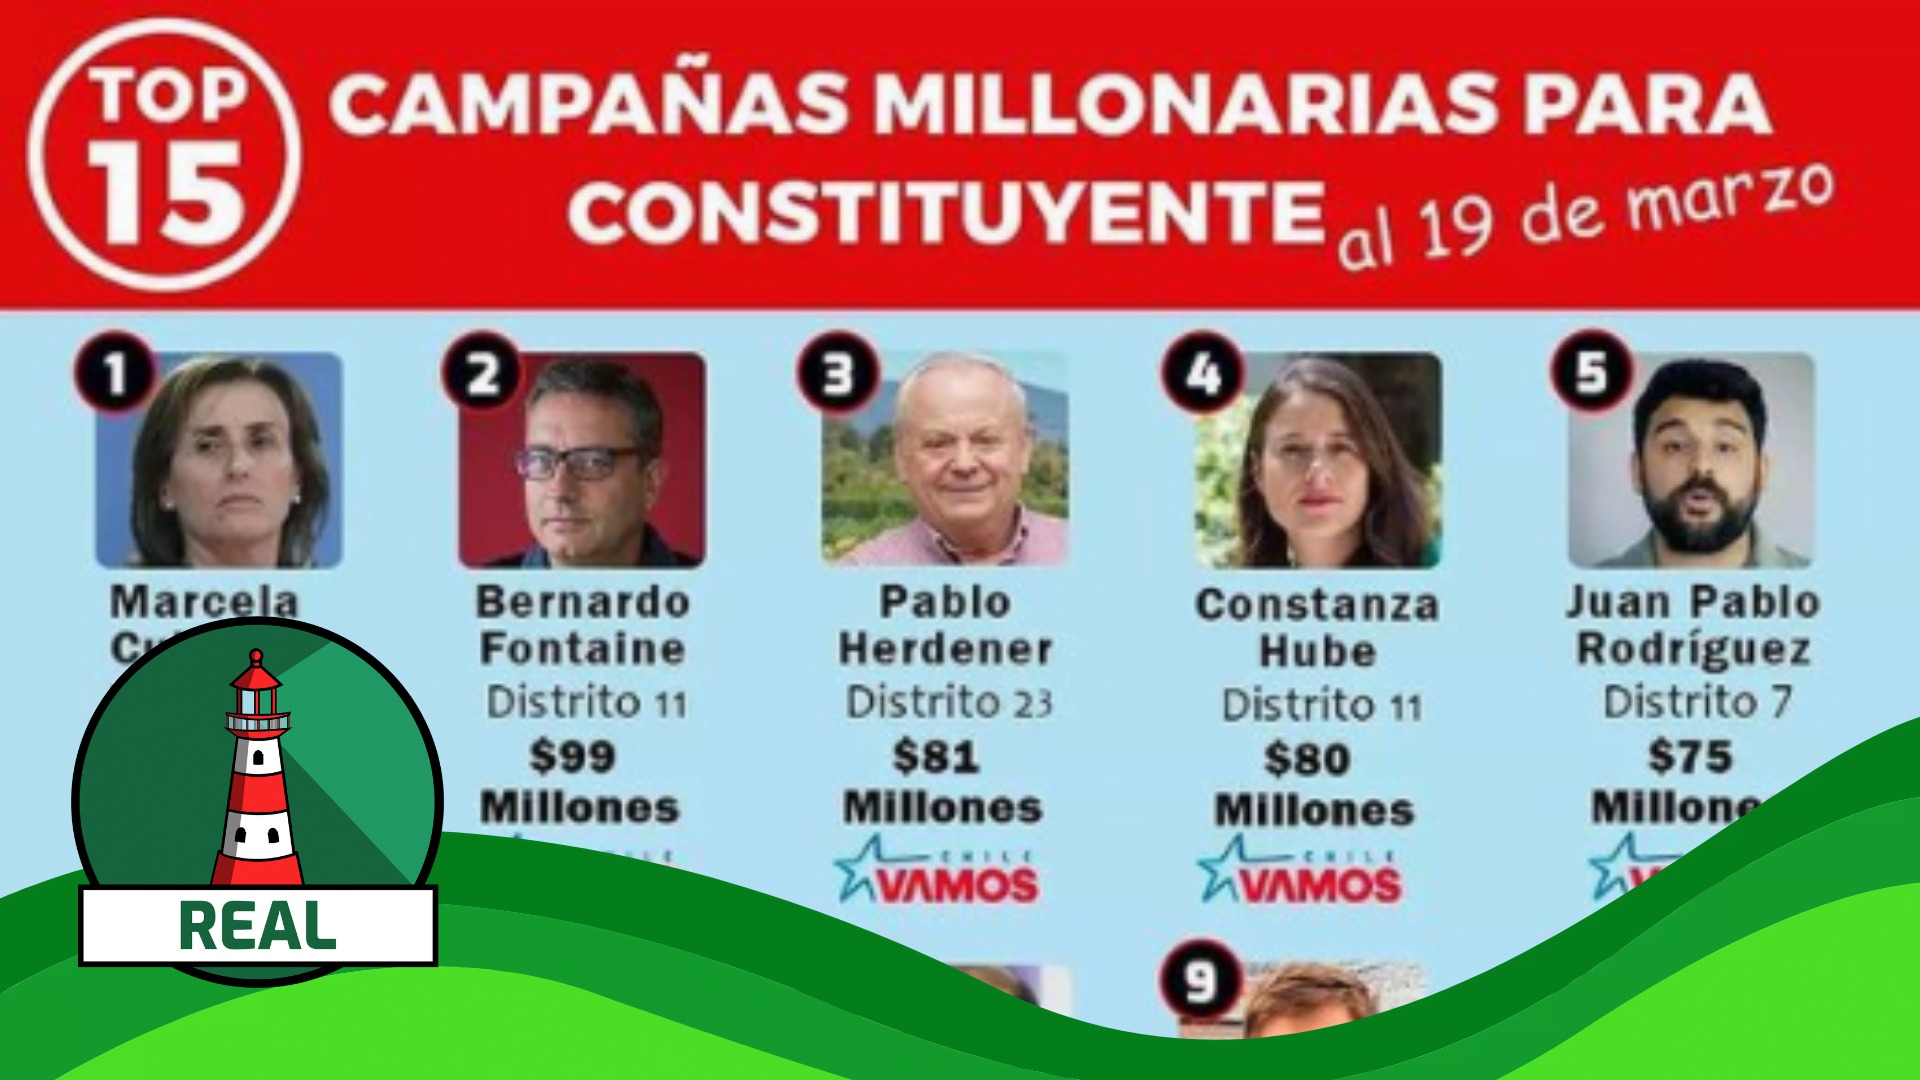 You are currently viewing (Imagen) 15 candidatos constituyentes tienen campa帽as millonarias: #Real